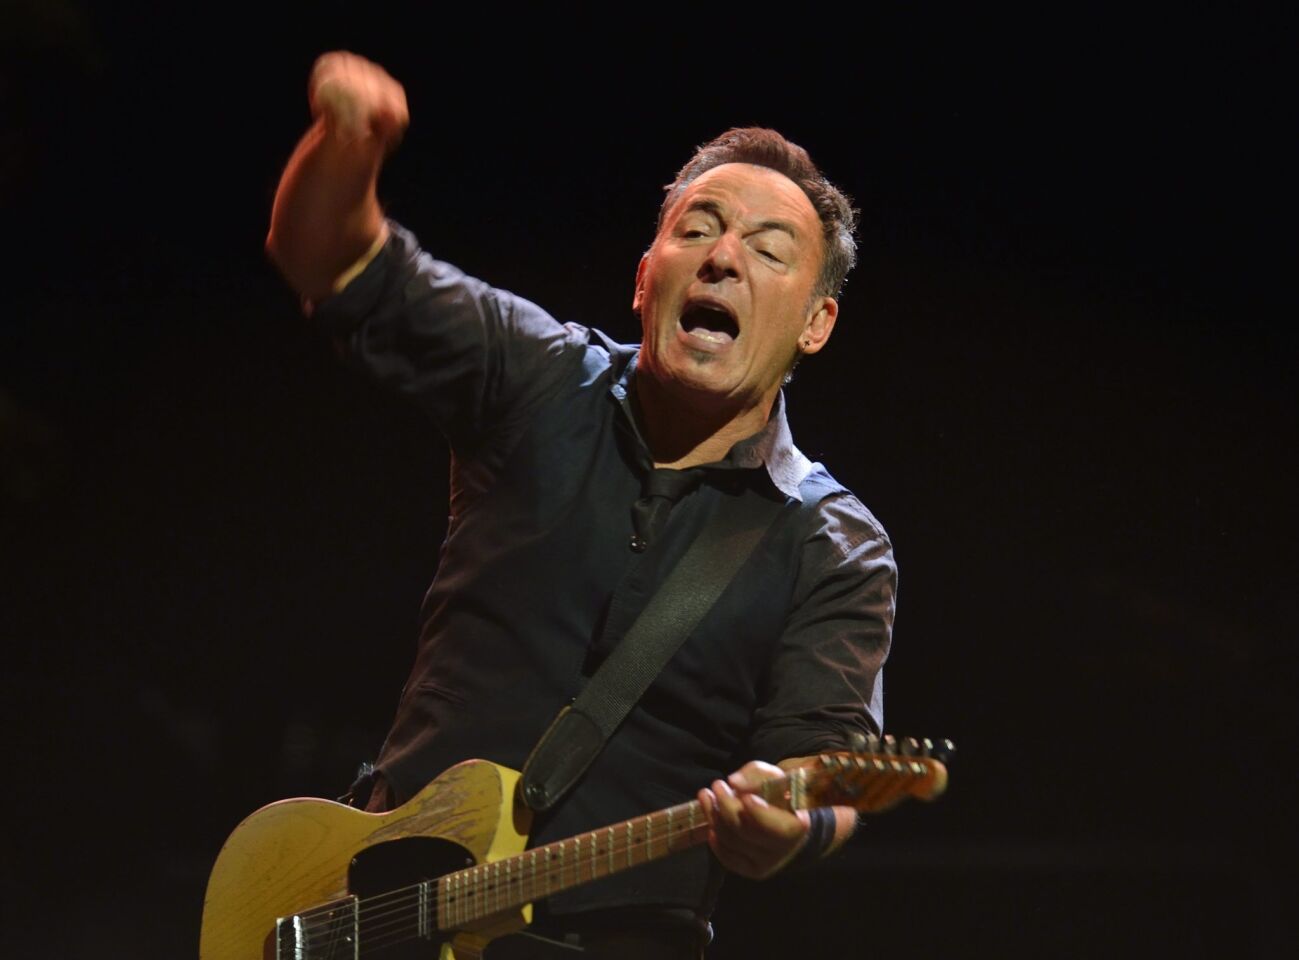 9. Bruce Springsteen